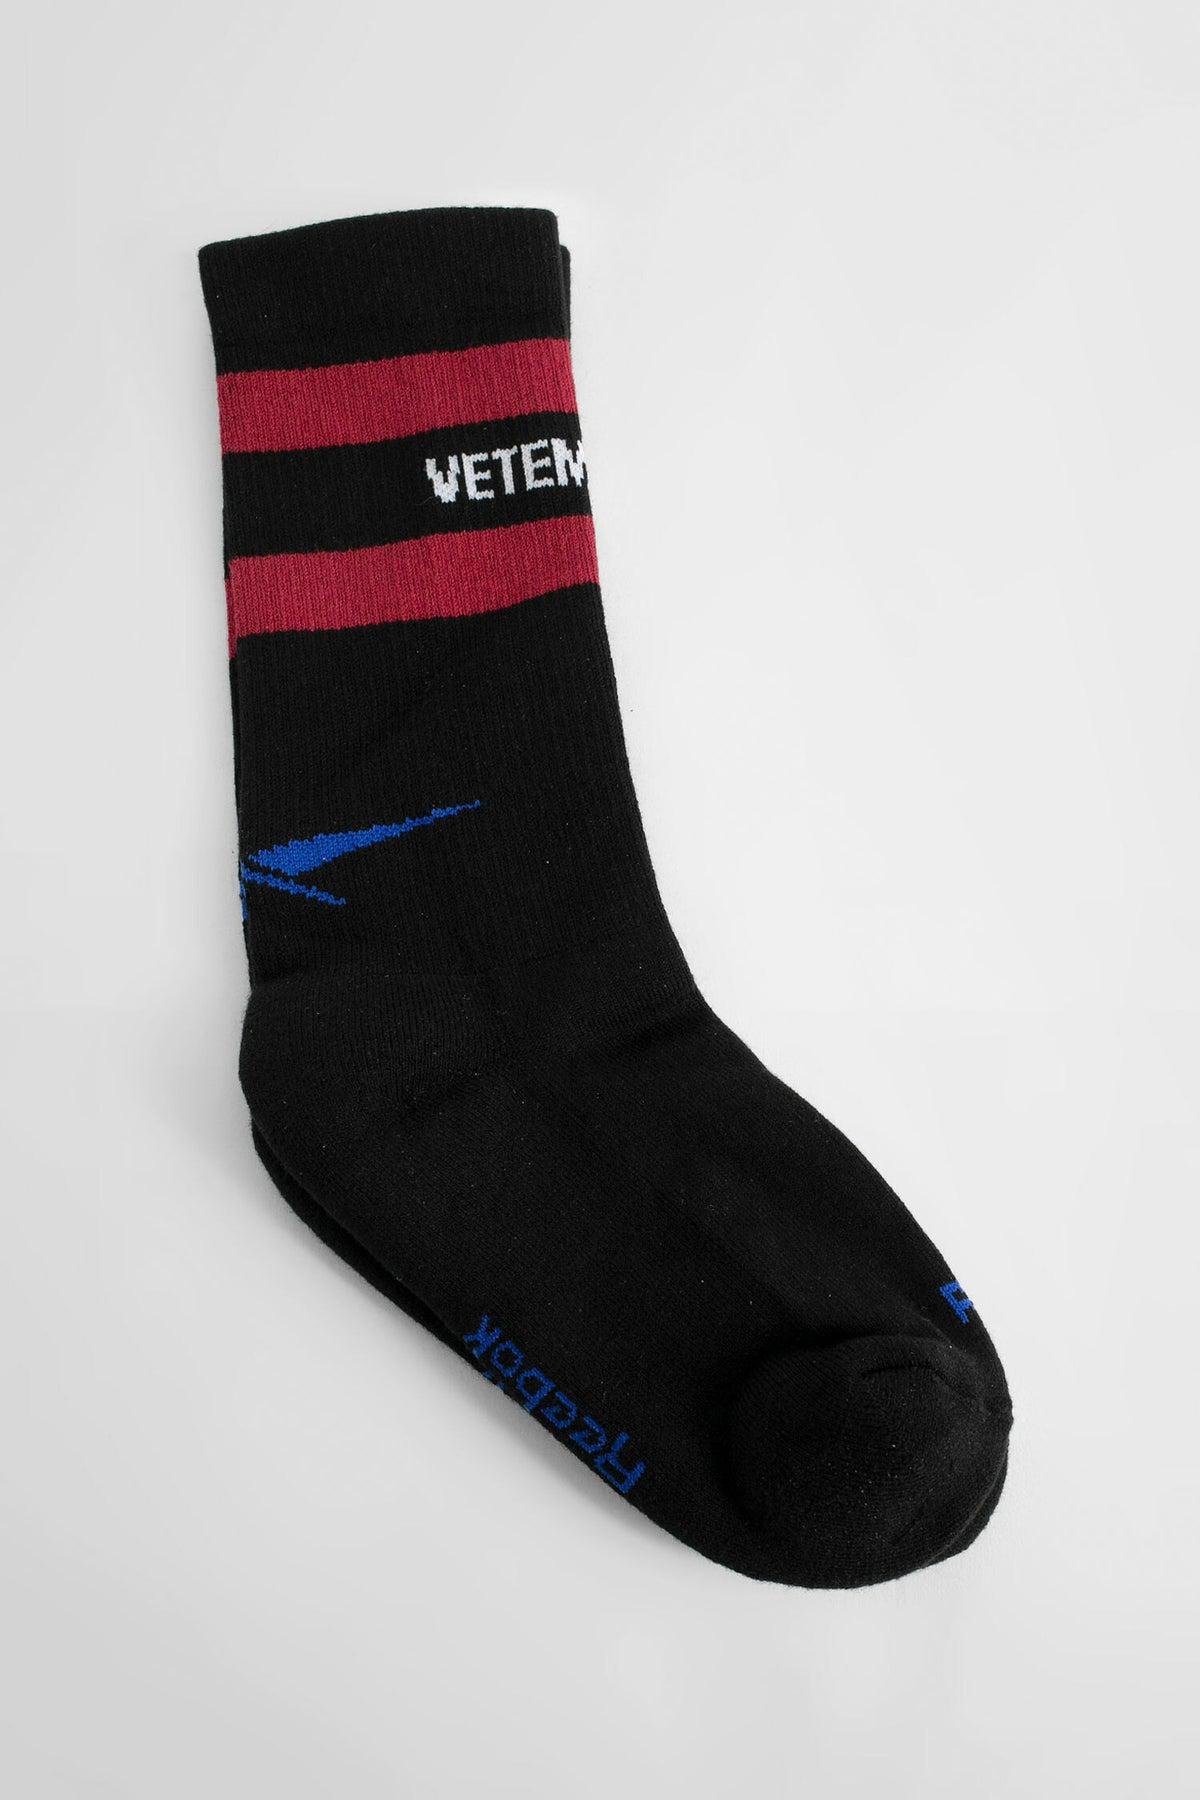 Vetements Man Black Socks by VETEMENTS | jellibeans